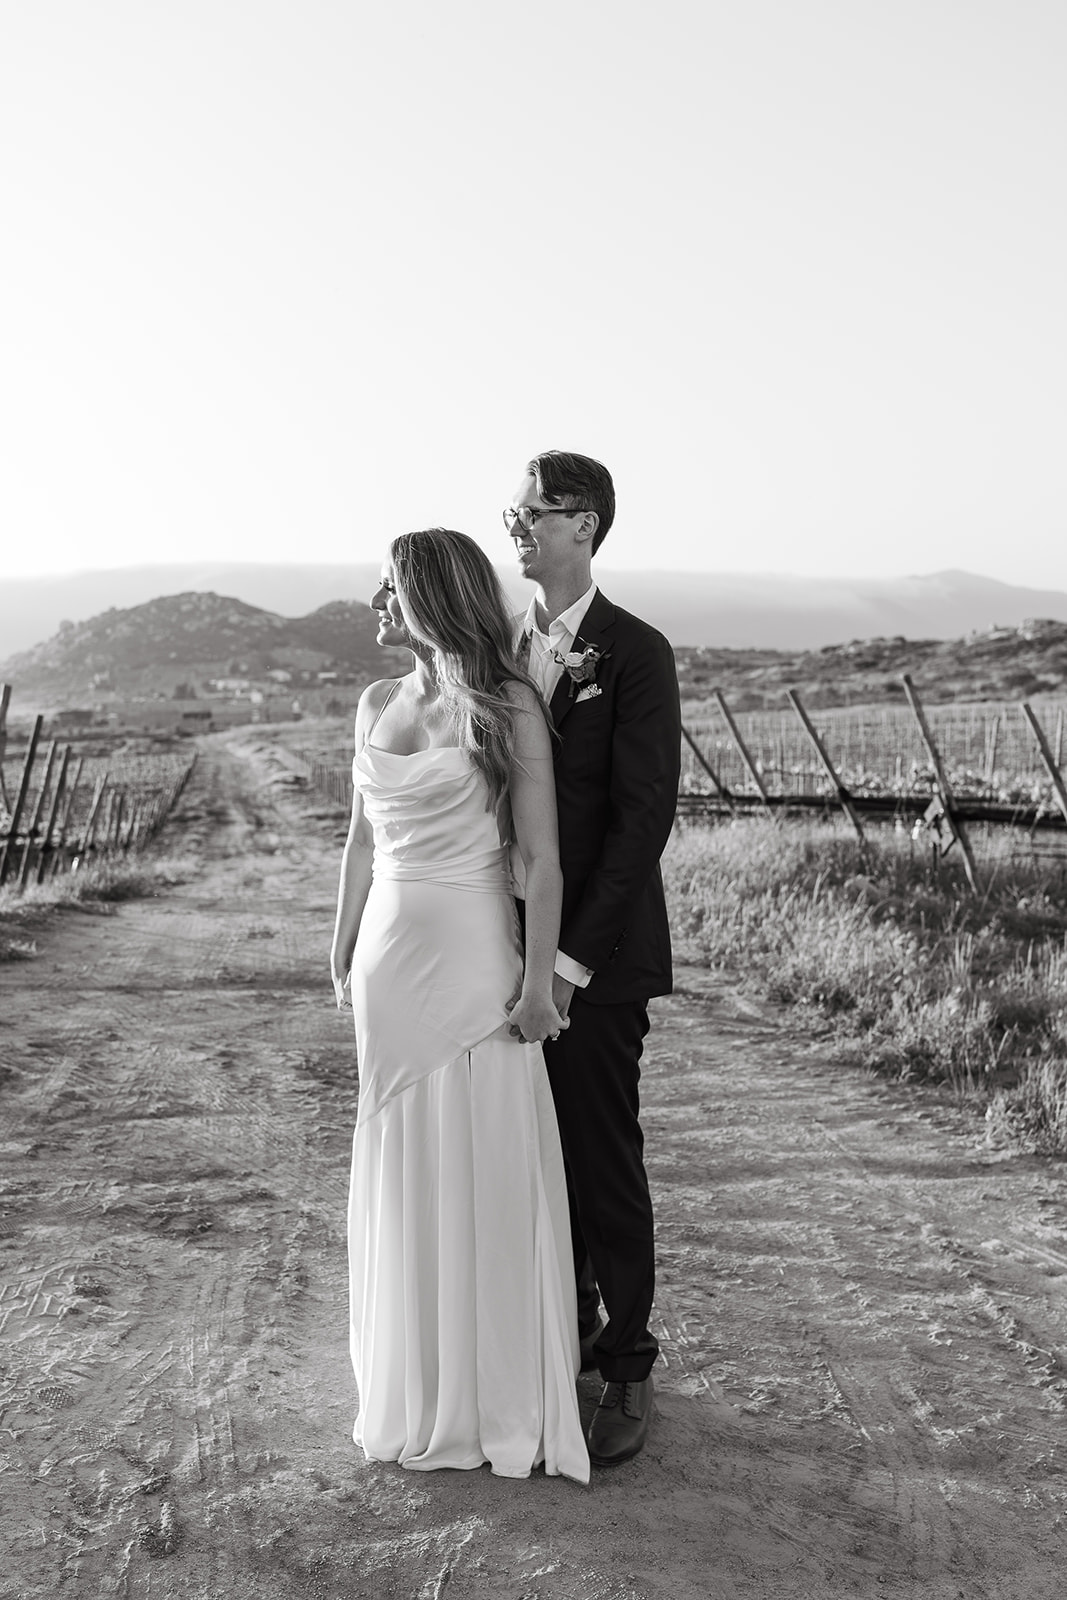 Wedding photography in Baja